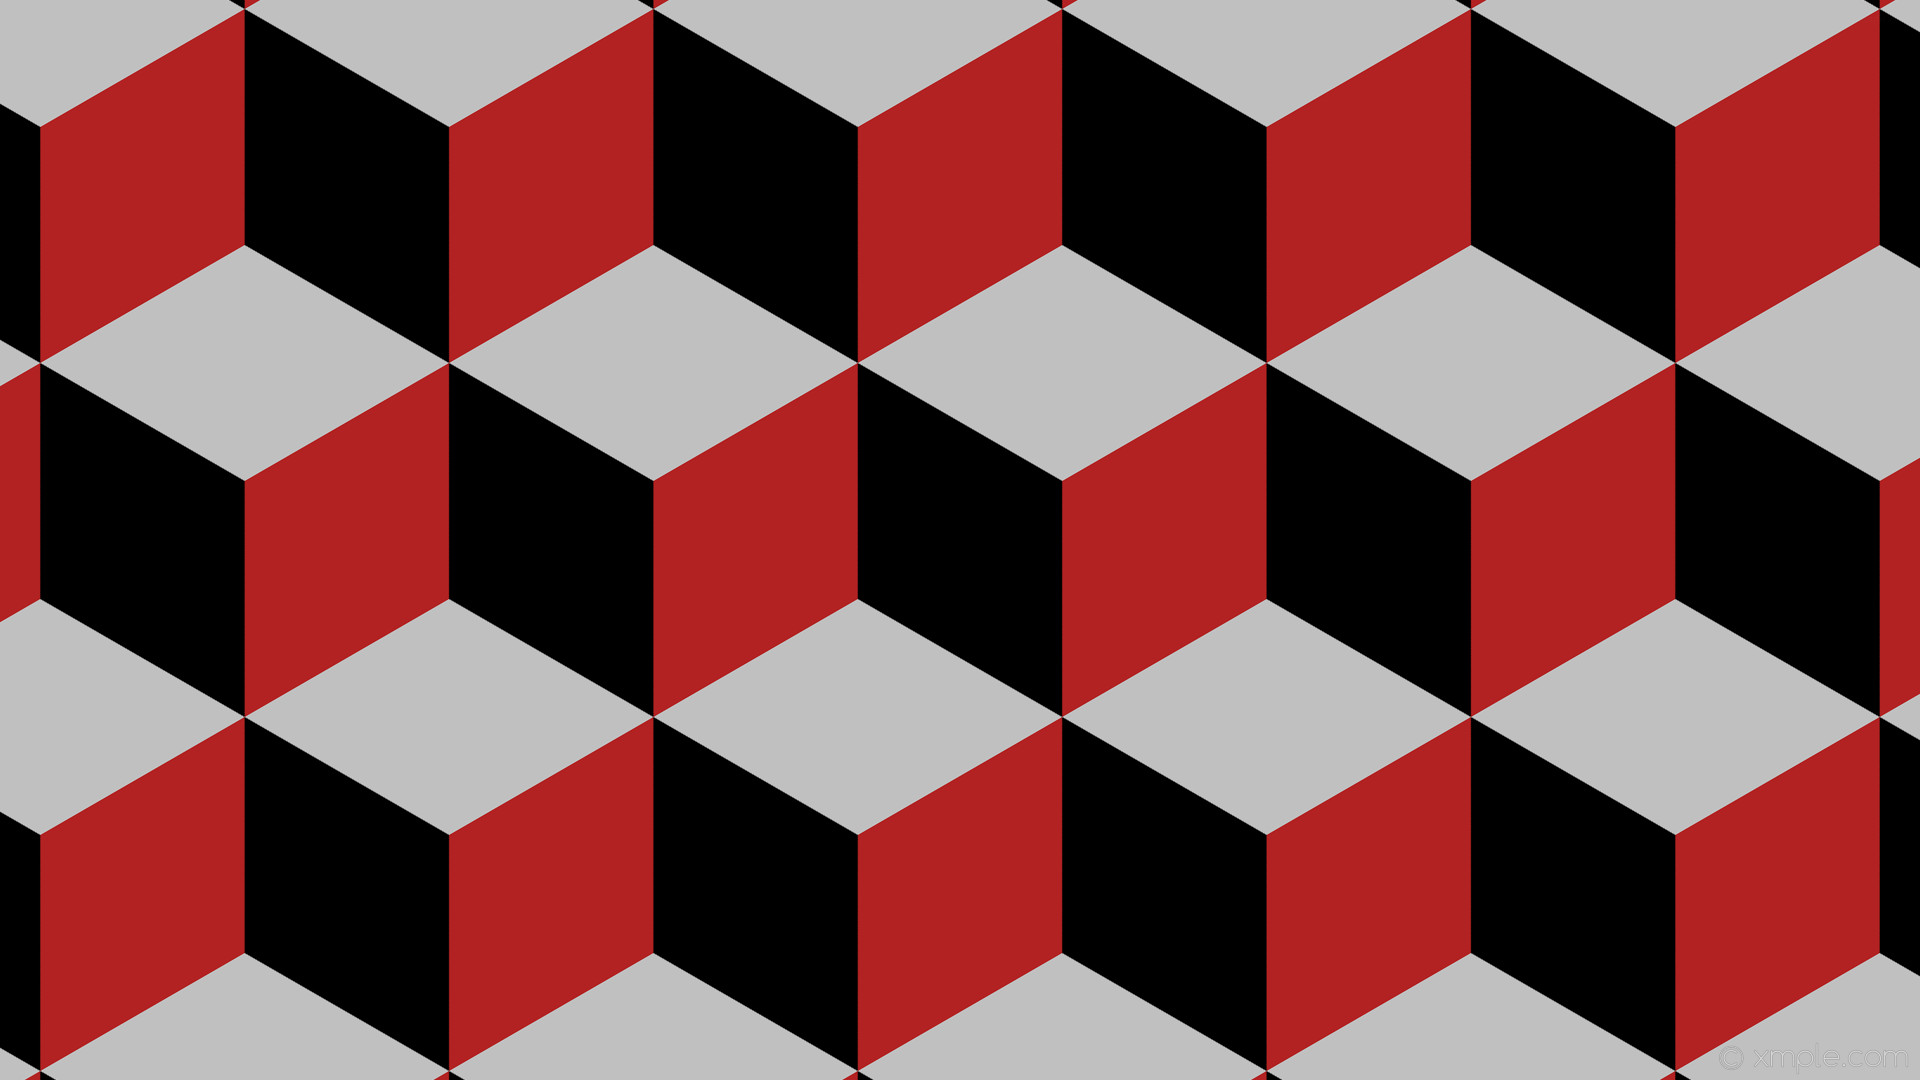 1920x1080 wallpaper red 3d cubes grey black fire brick silver #000000 #b22222 #c0c0c0  120